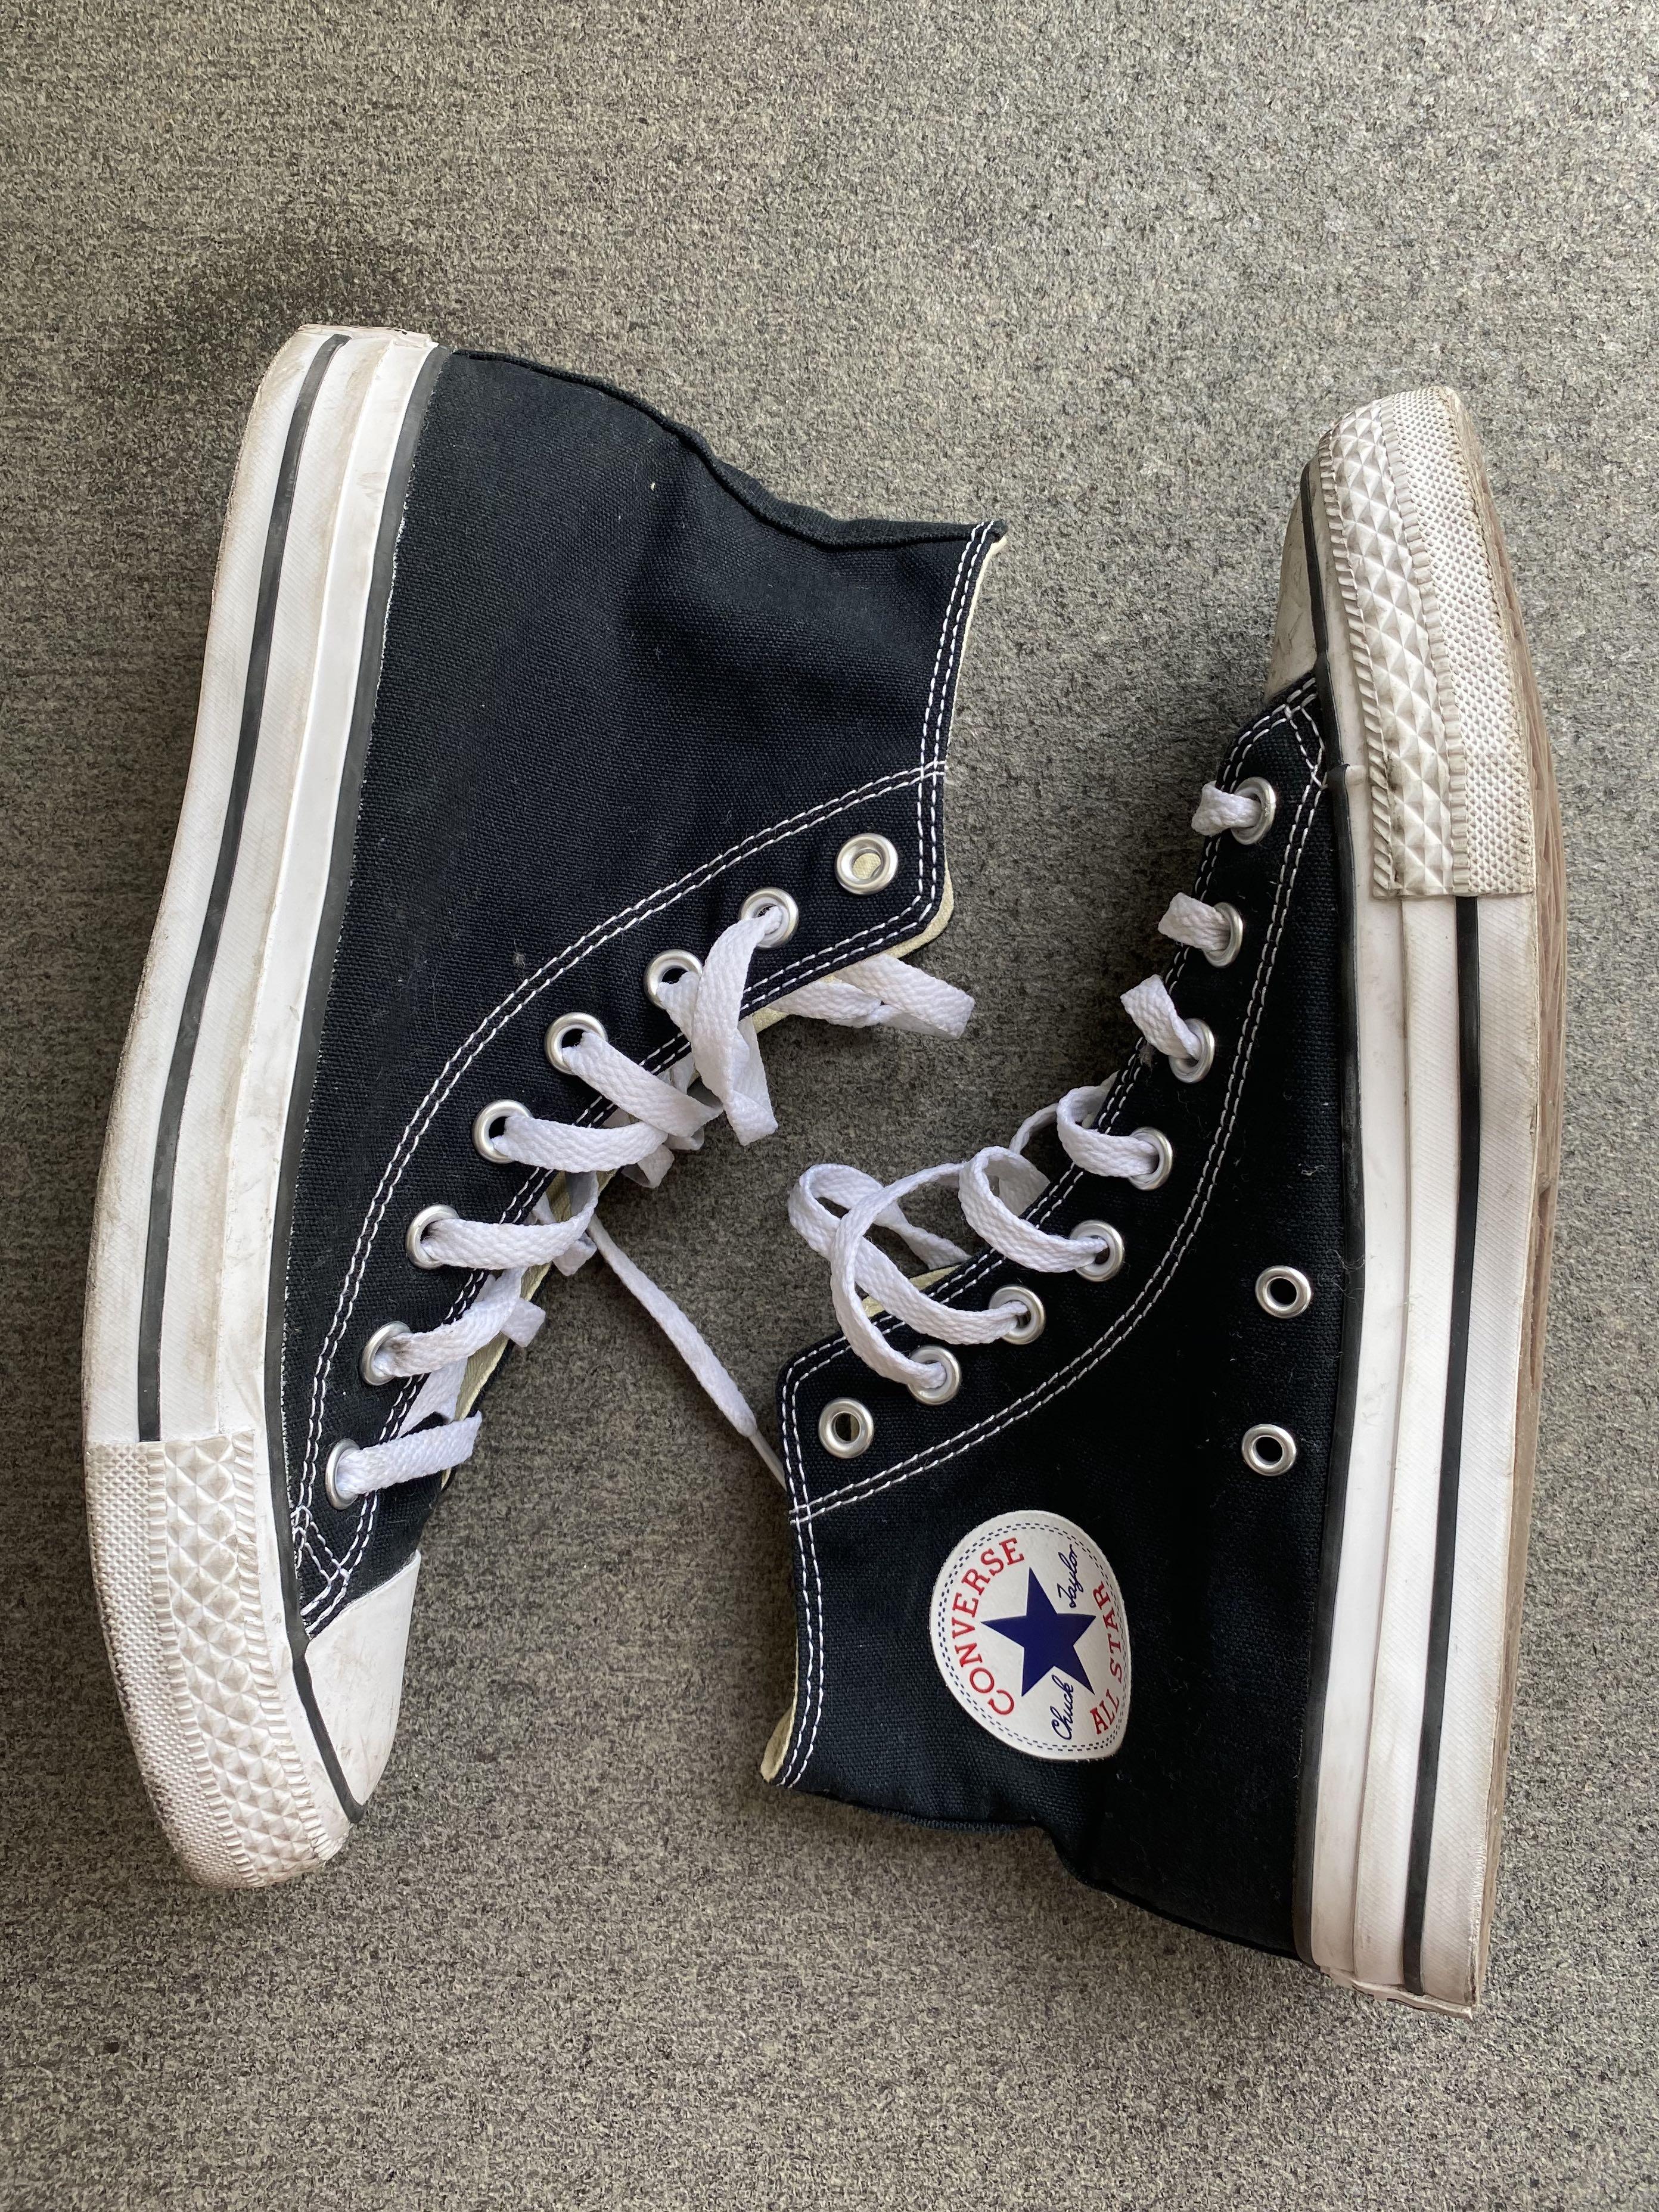 classic converse shoes